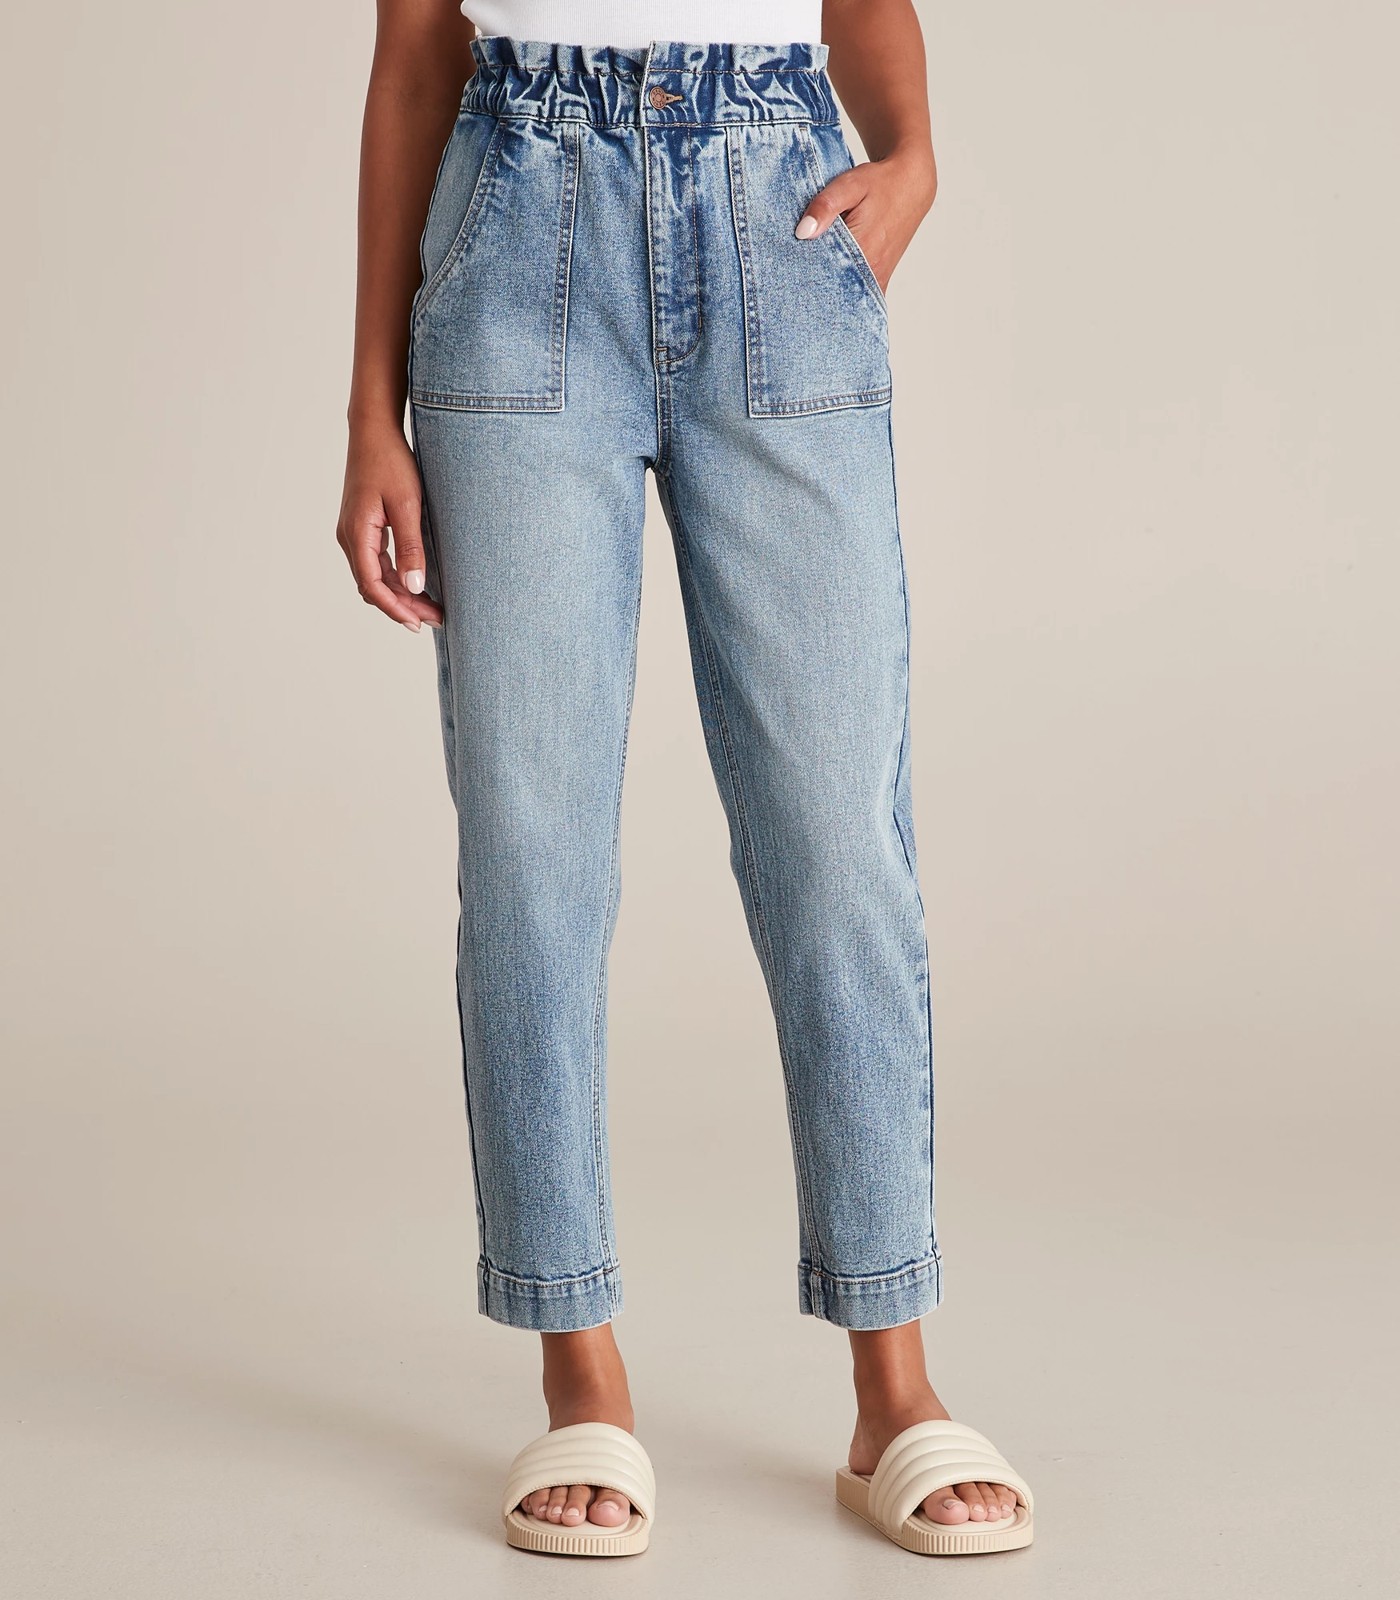 Gracie Denim Paperbag Super High Rise Ankle Length Jeans | Target Australia